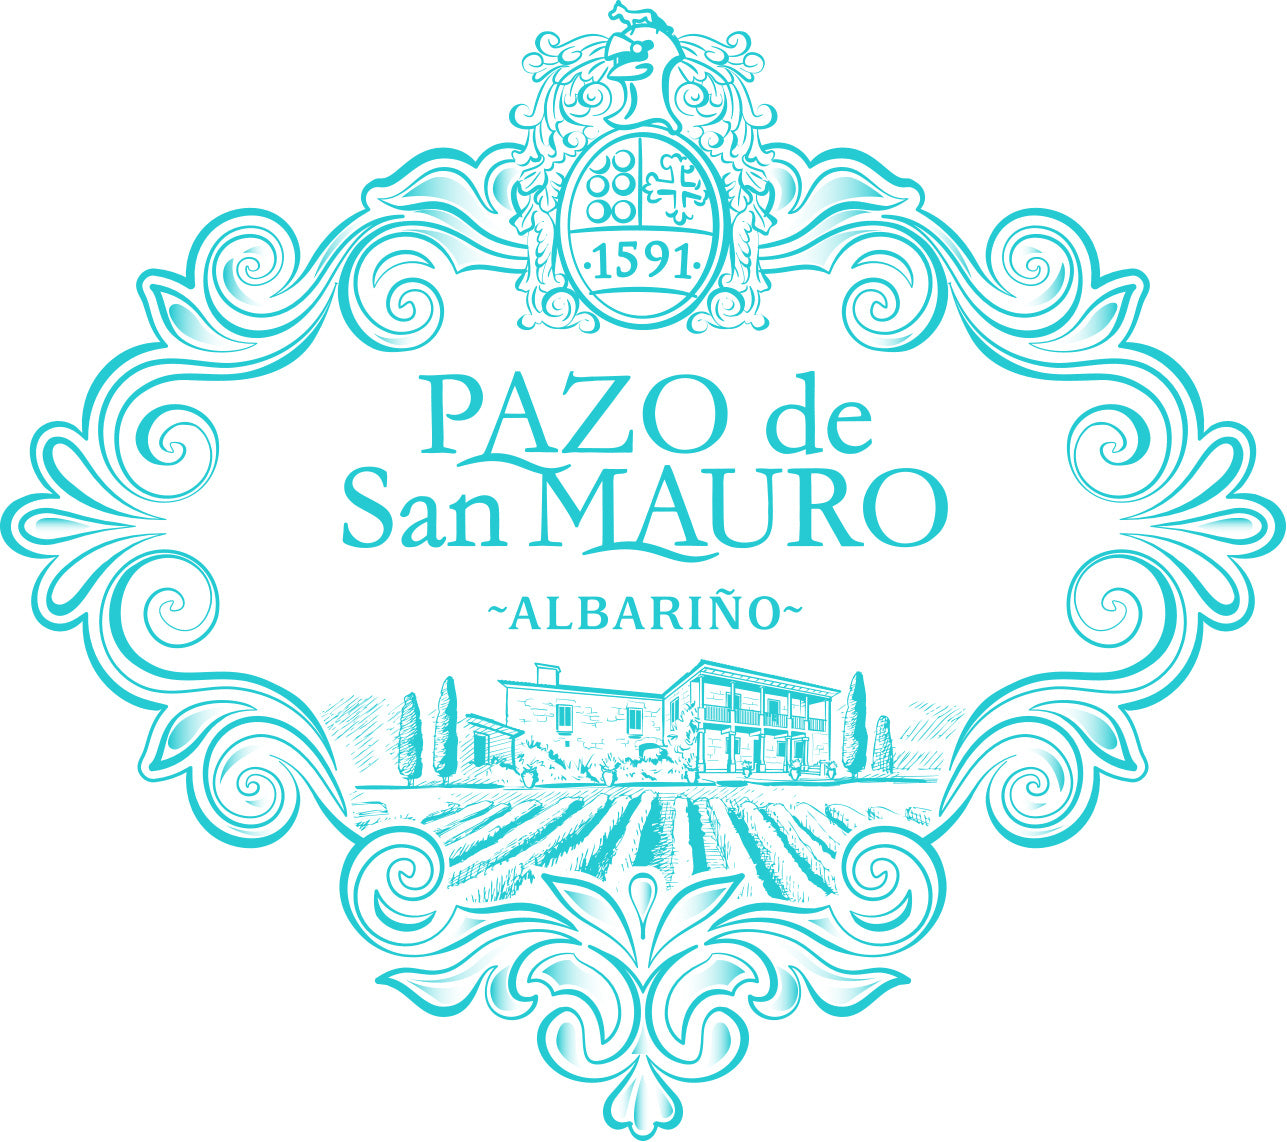 Pazo de San Mauro Albariño 2019